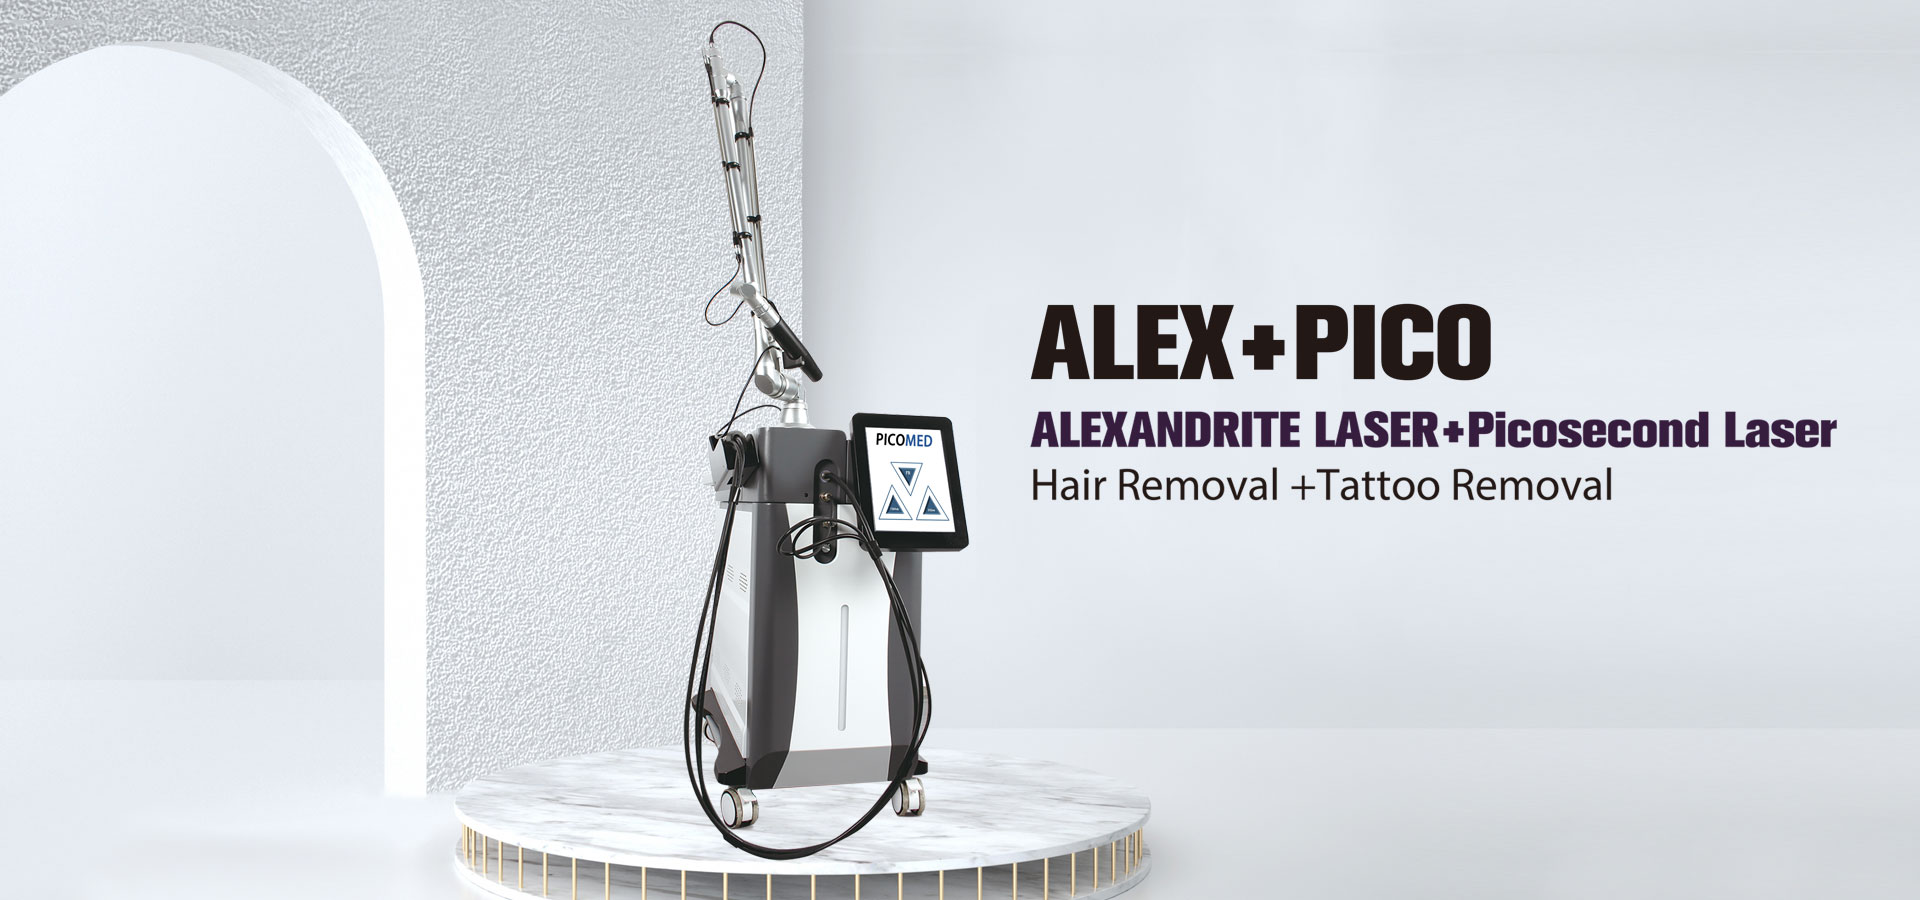 Alexandrite-laserfabriek